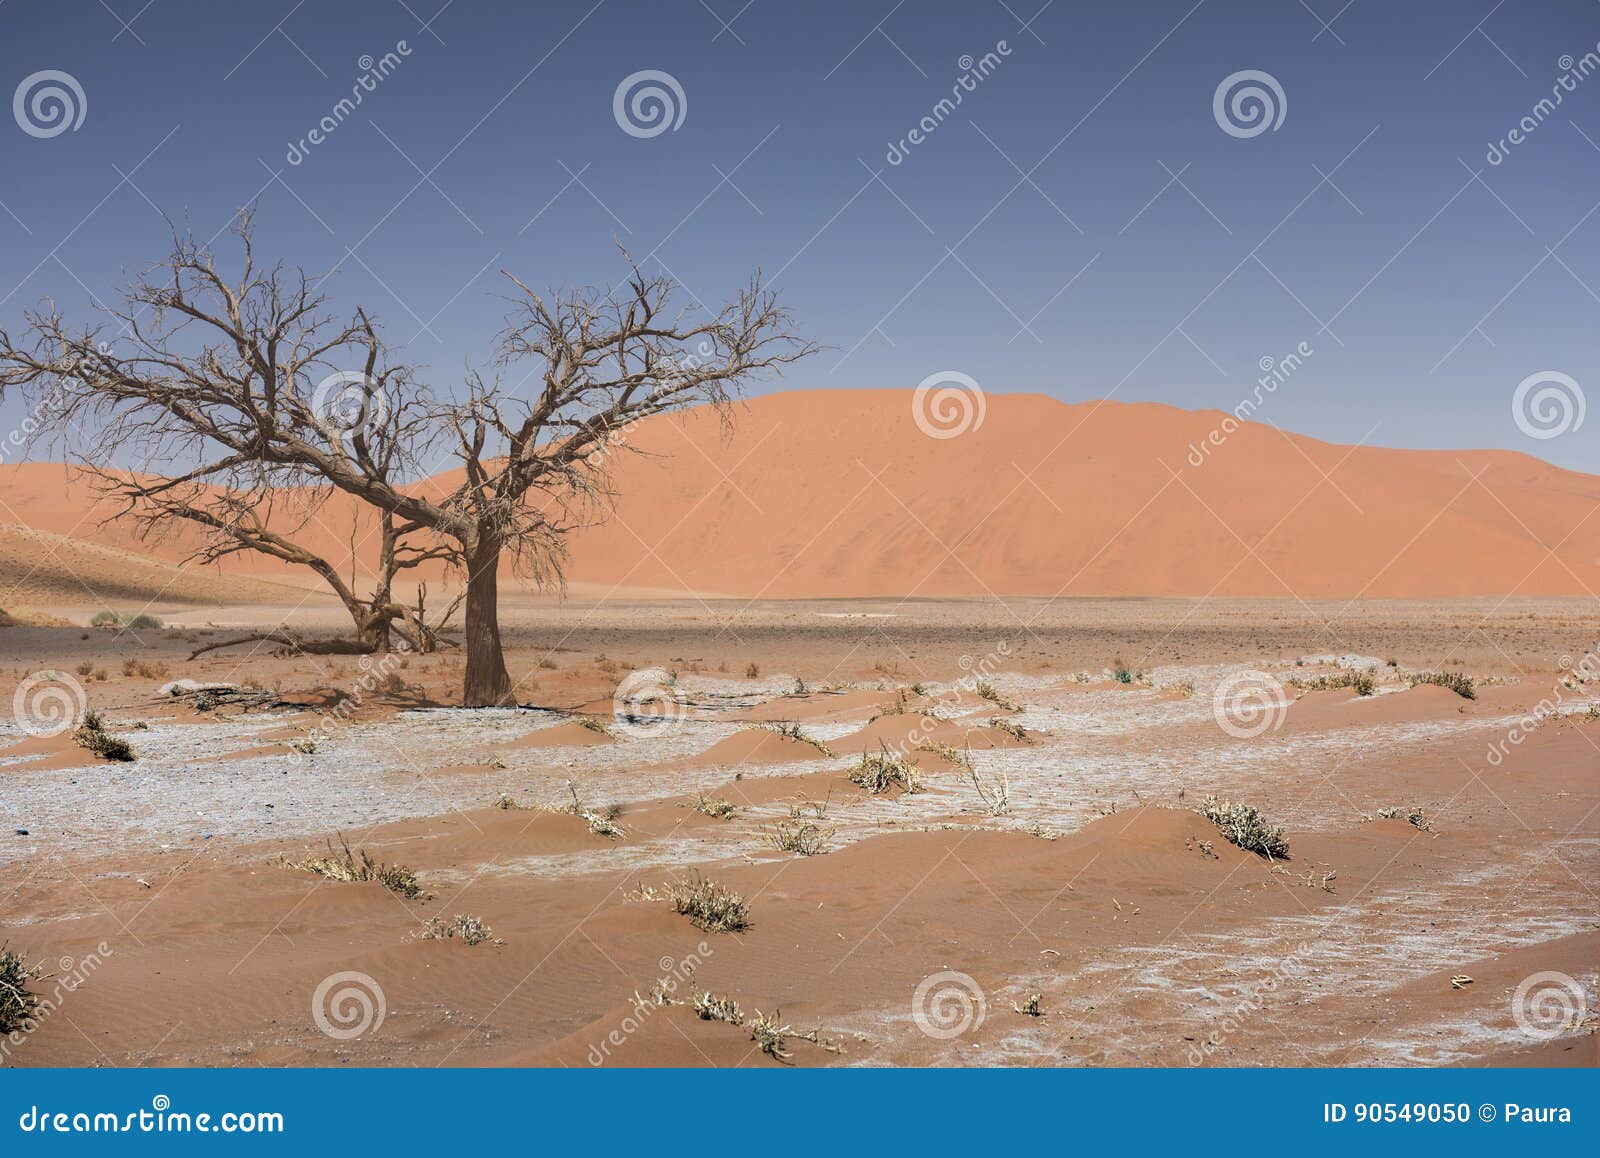 sossusvlei in namib desert, namibia